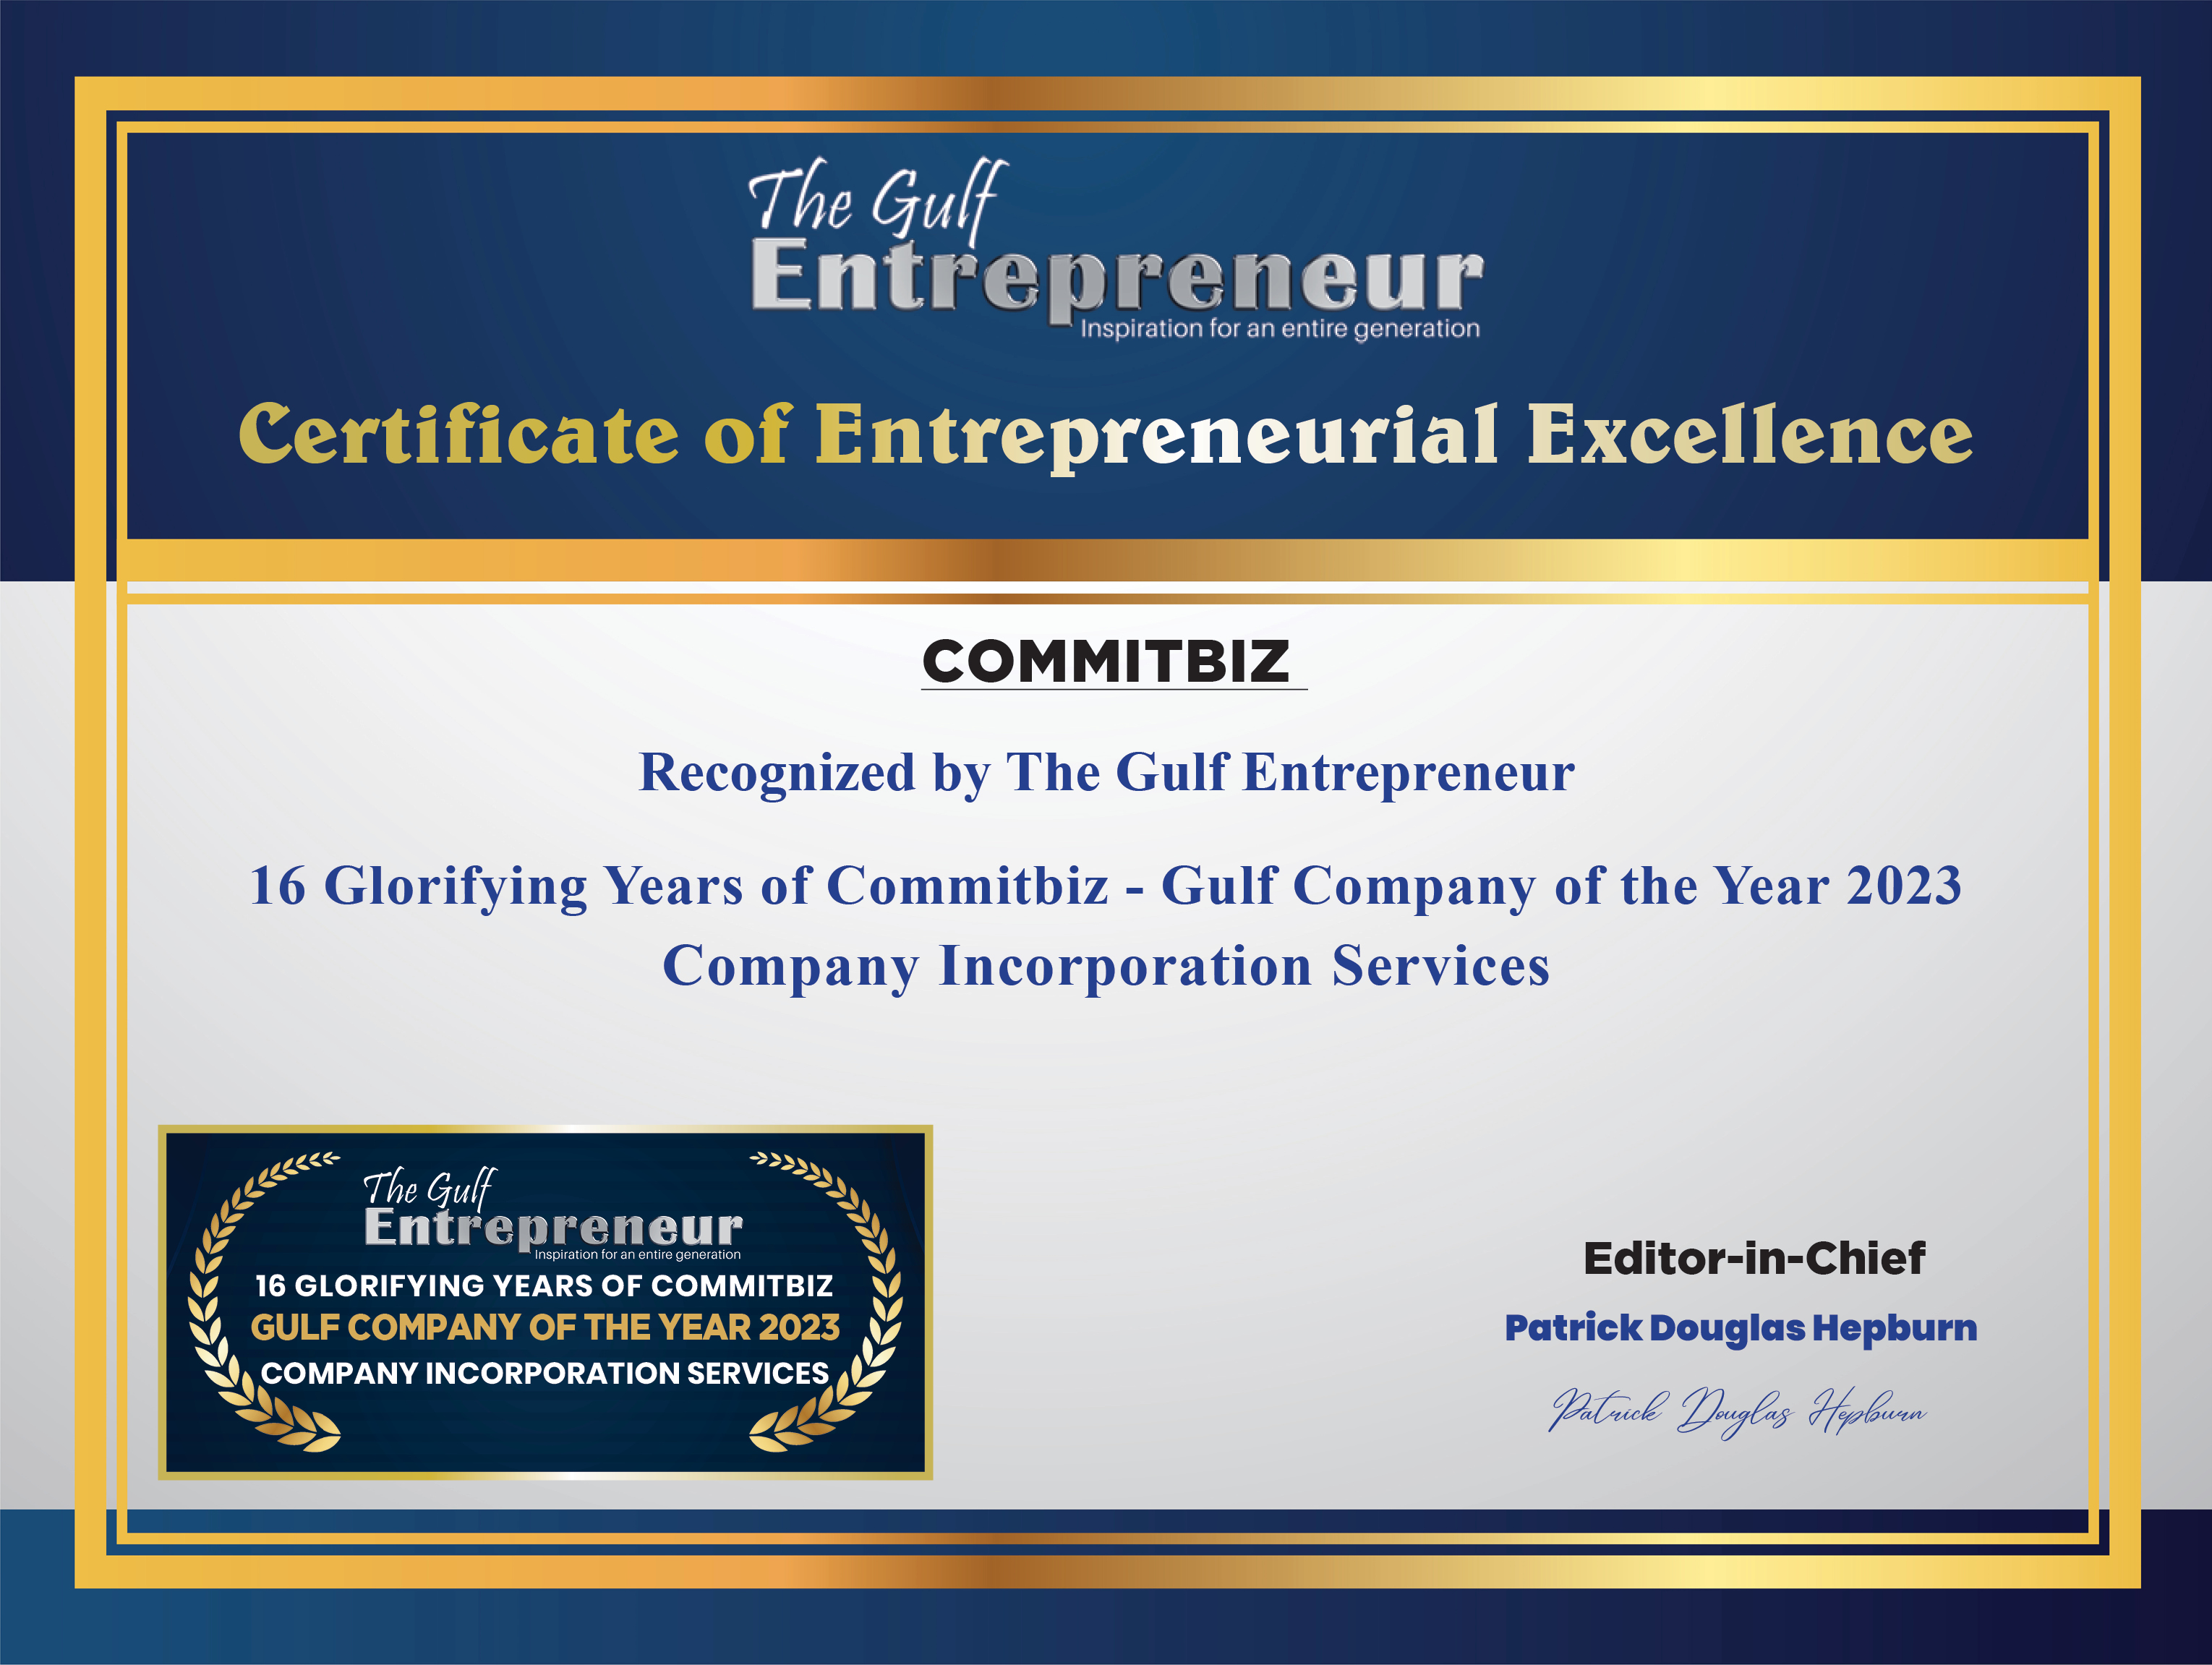 Gulf Company of the Year 2023 - Commitbiz LLC